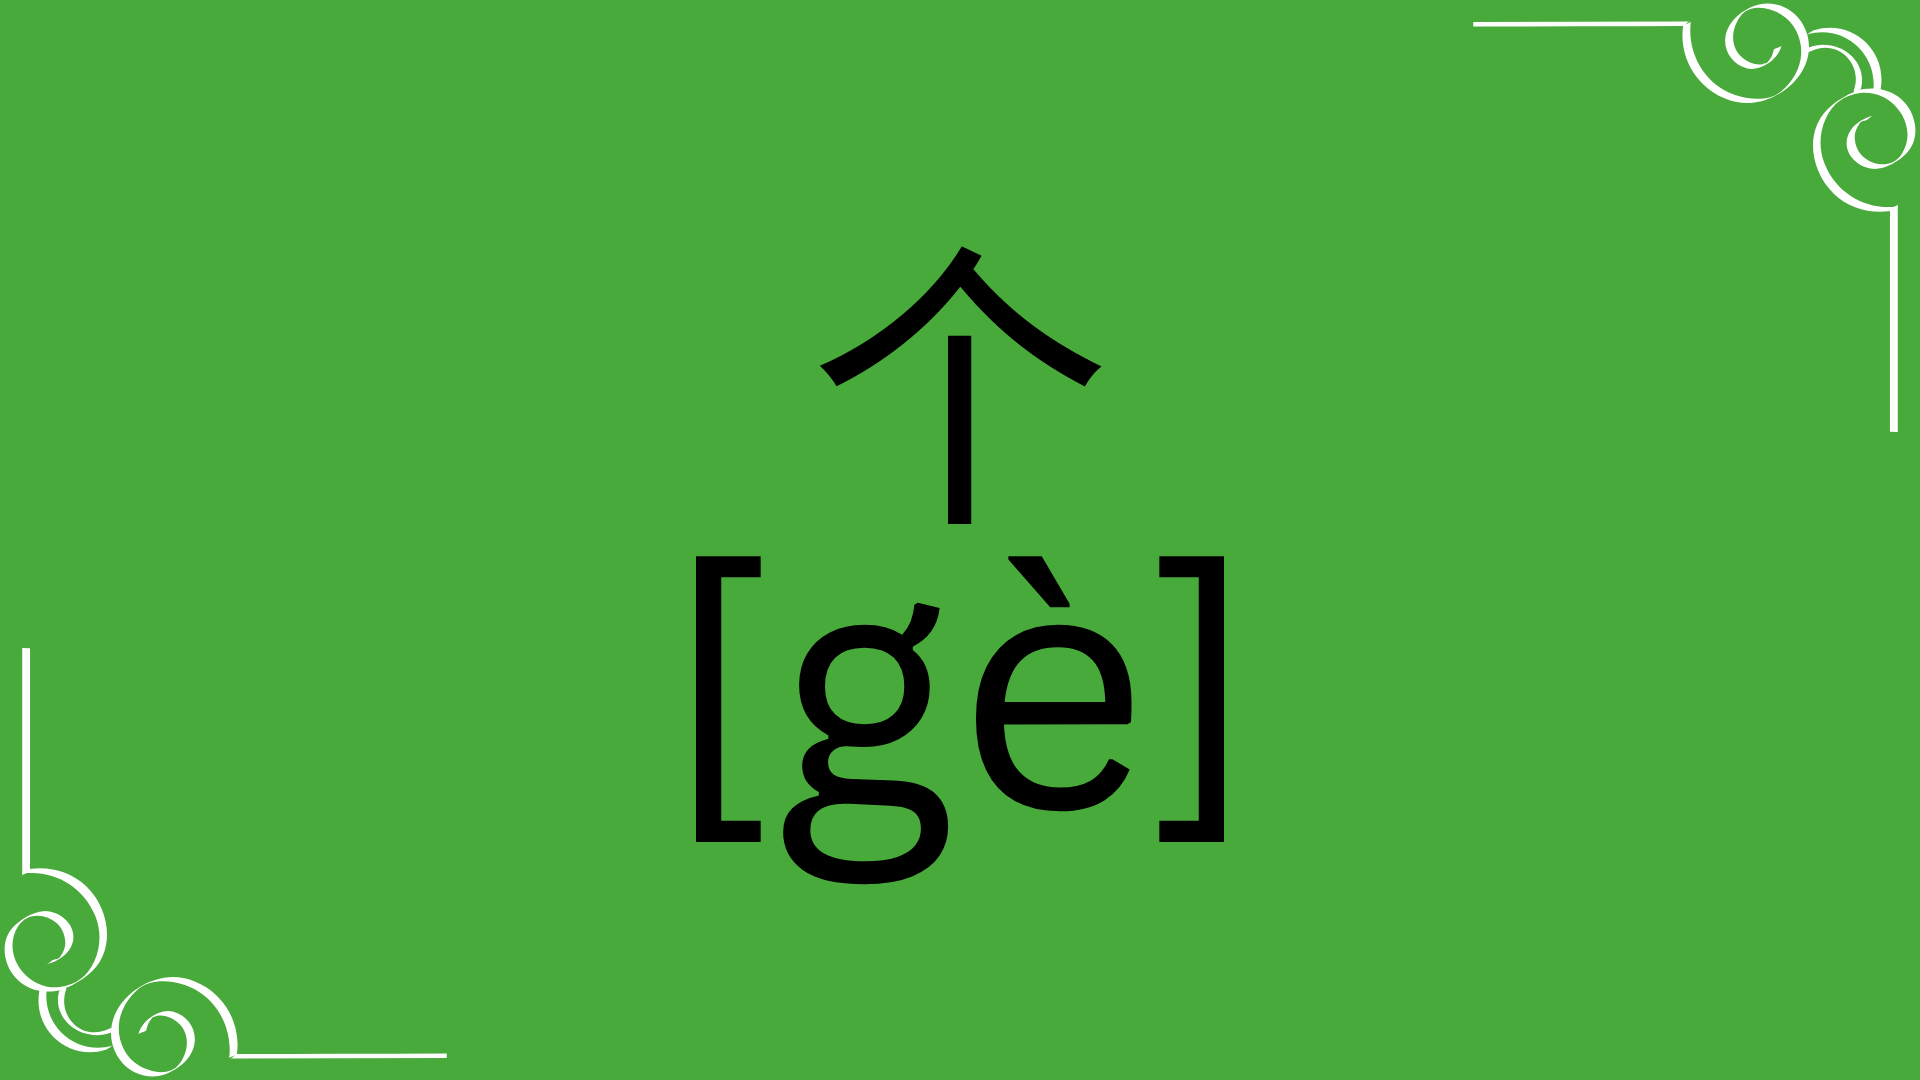 Chinese measure word 个 ge